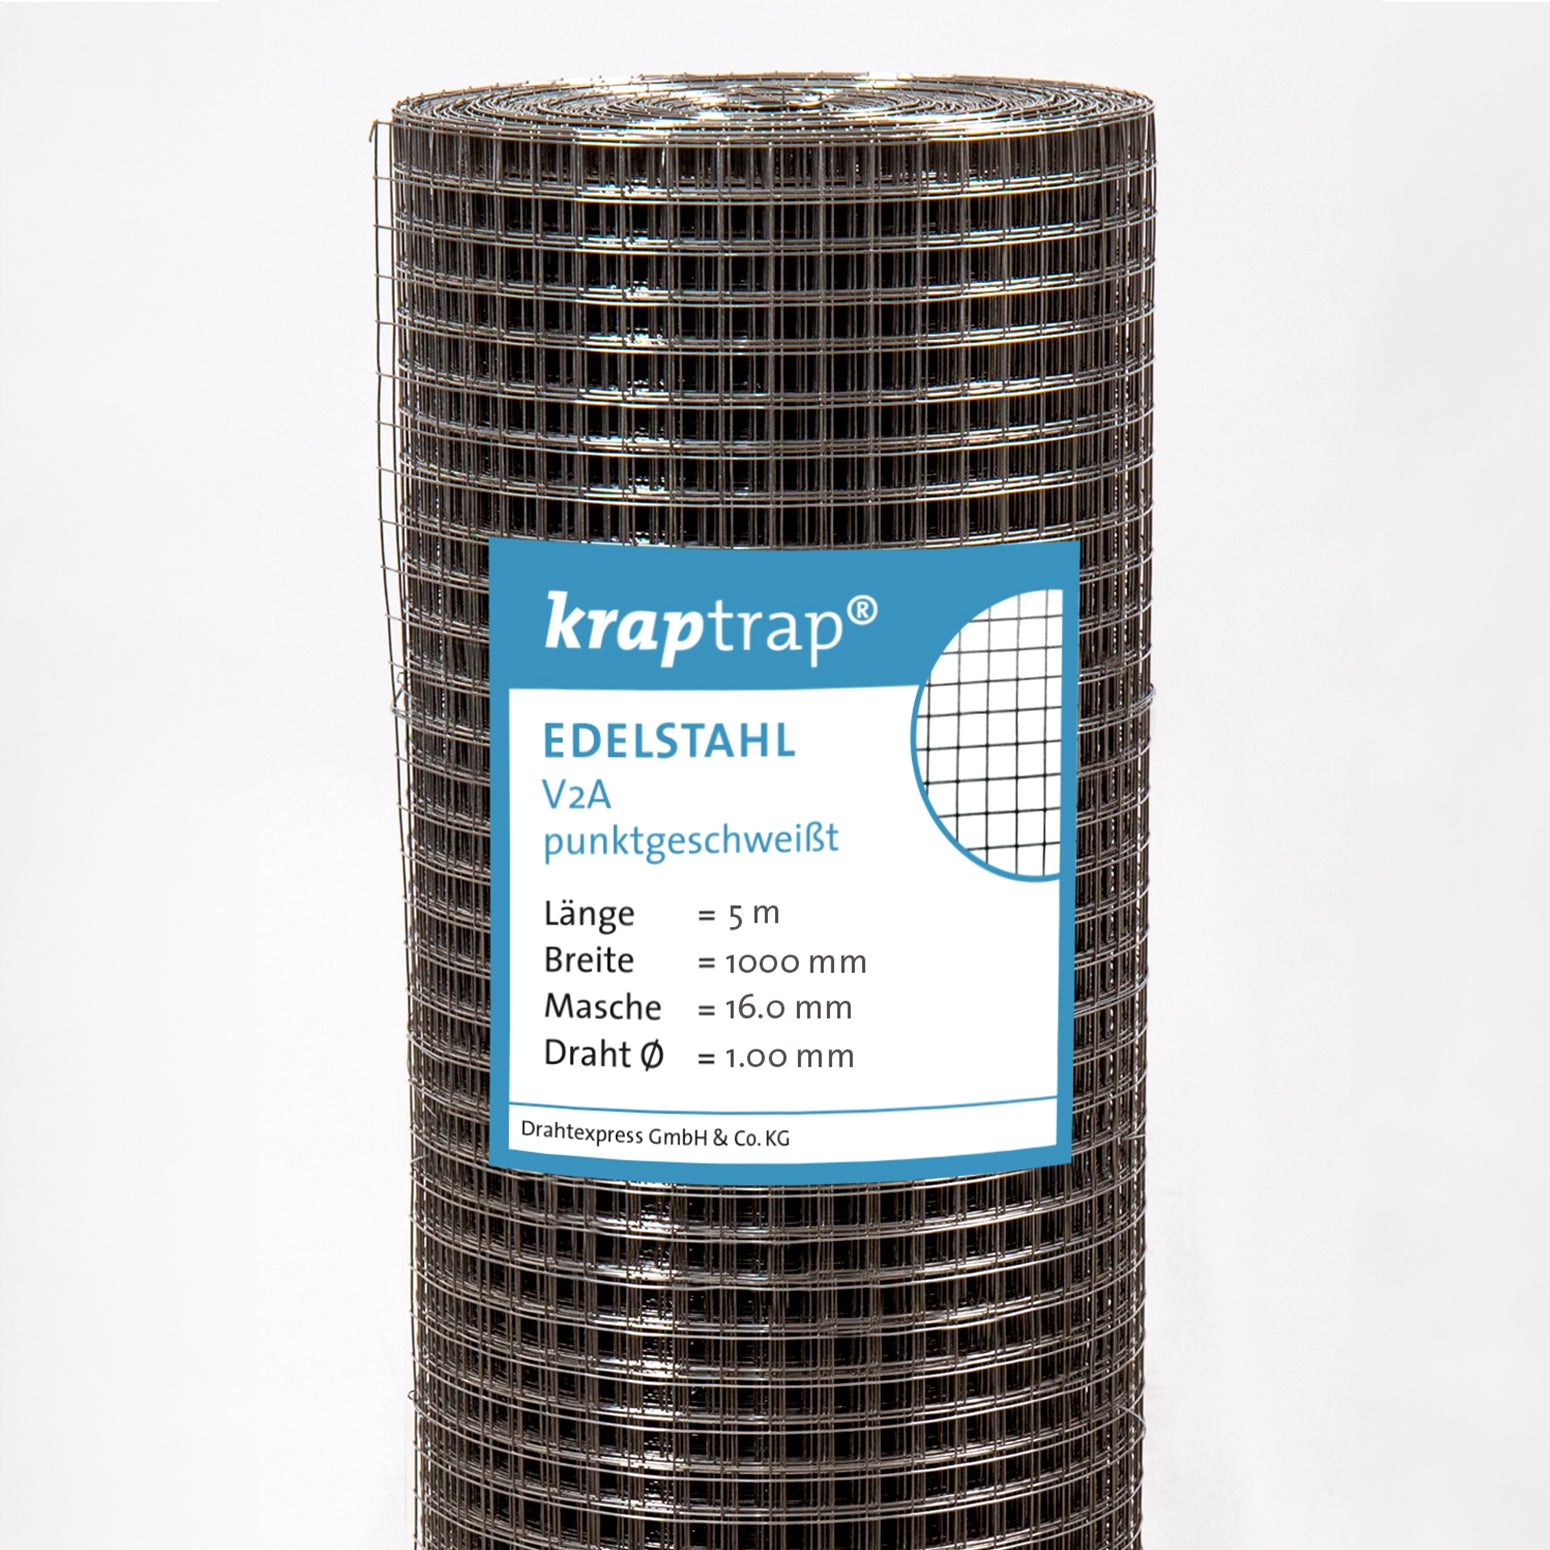 Kraptrap® Edelstahl Volierendraht Drahtgitter V2A 16x16 mm Masche